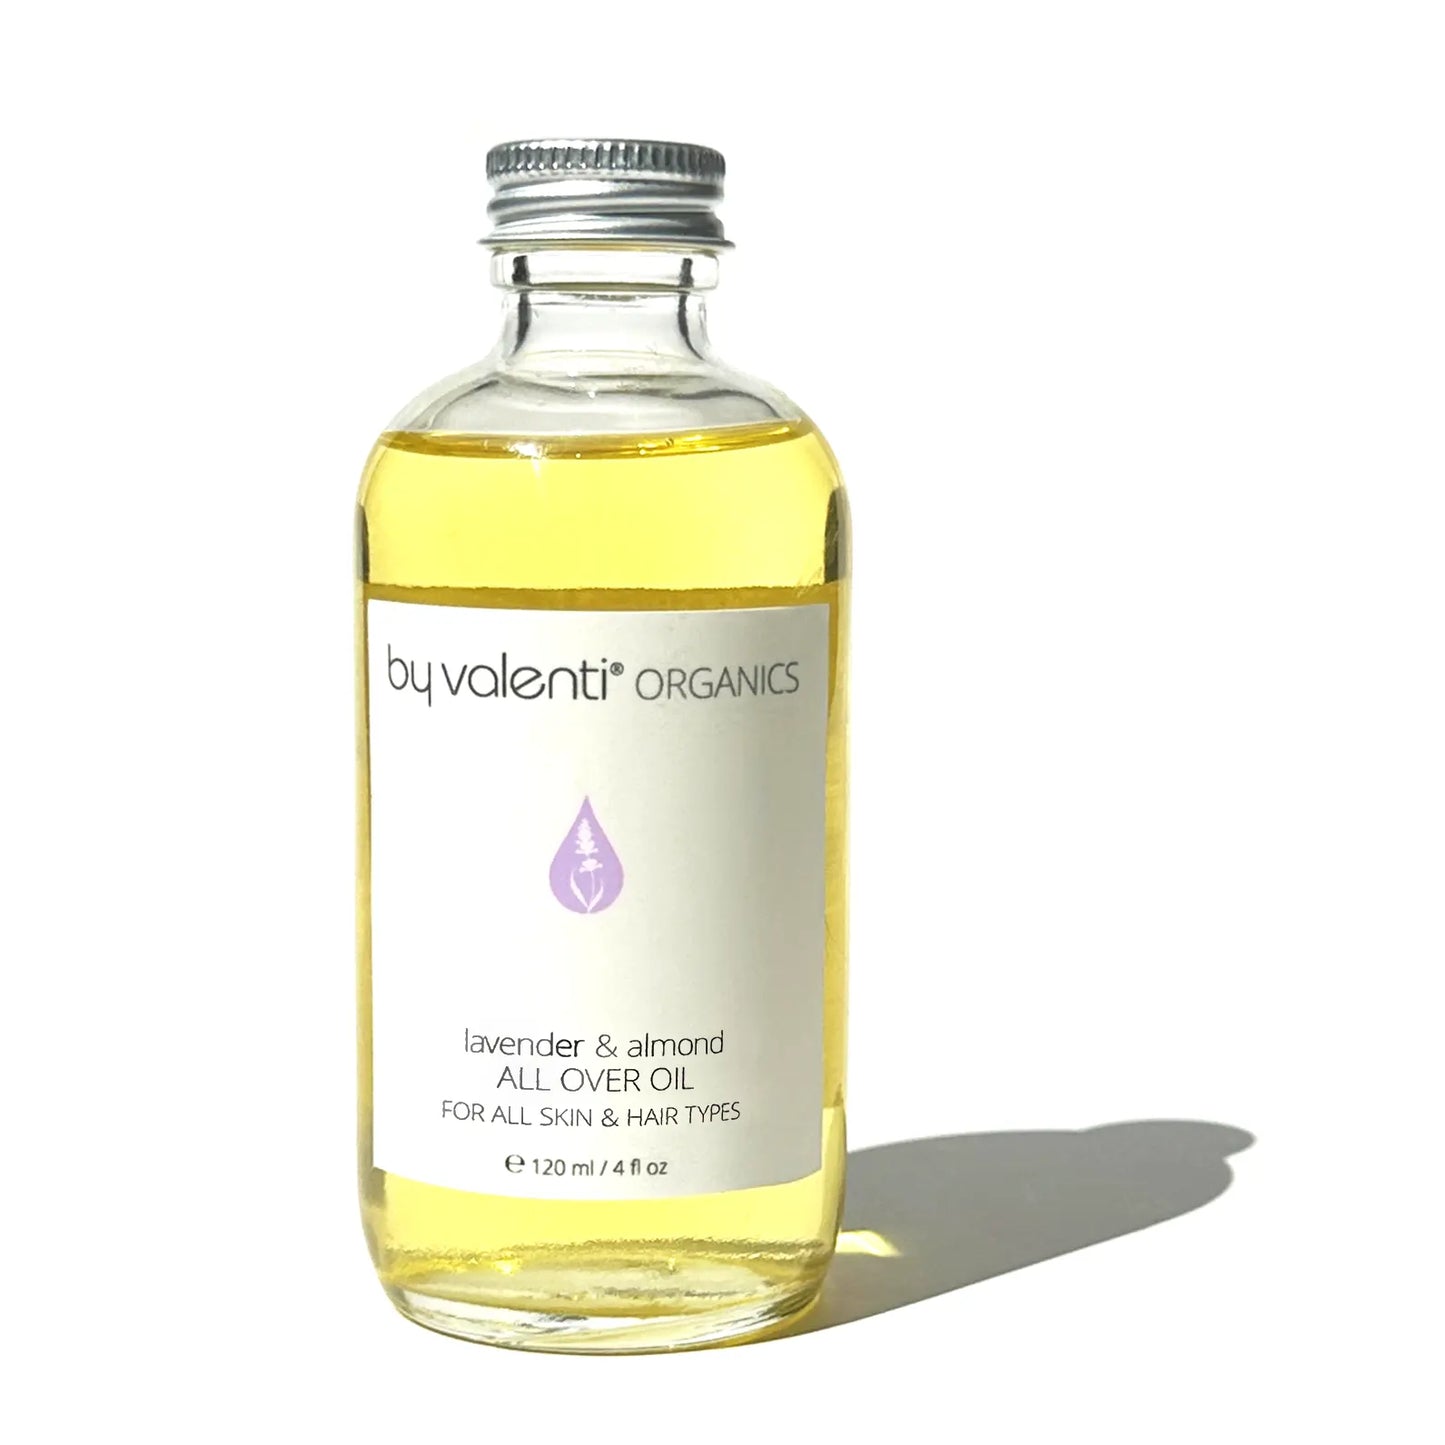 By Valenti Organics Lavender Almond Body Oil for Healthier Happier Skin